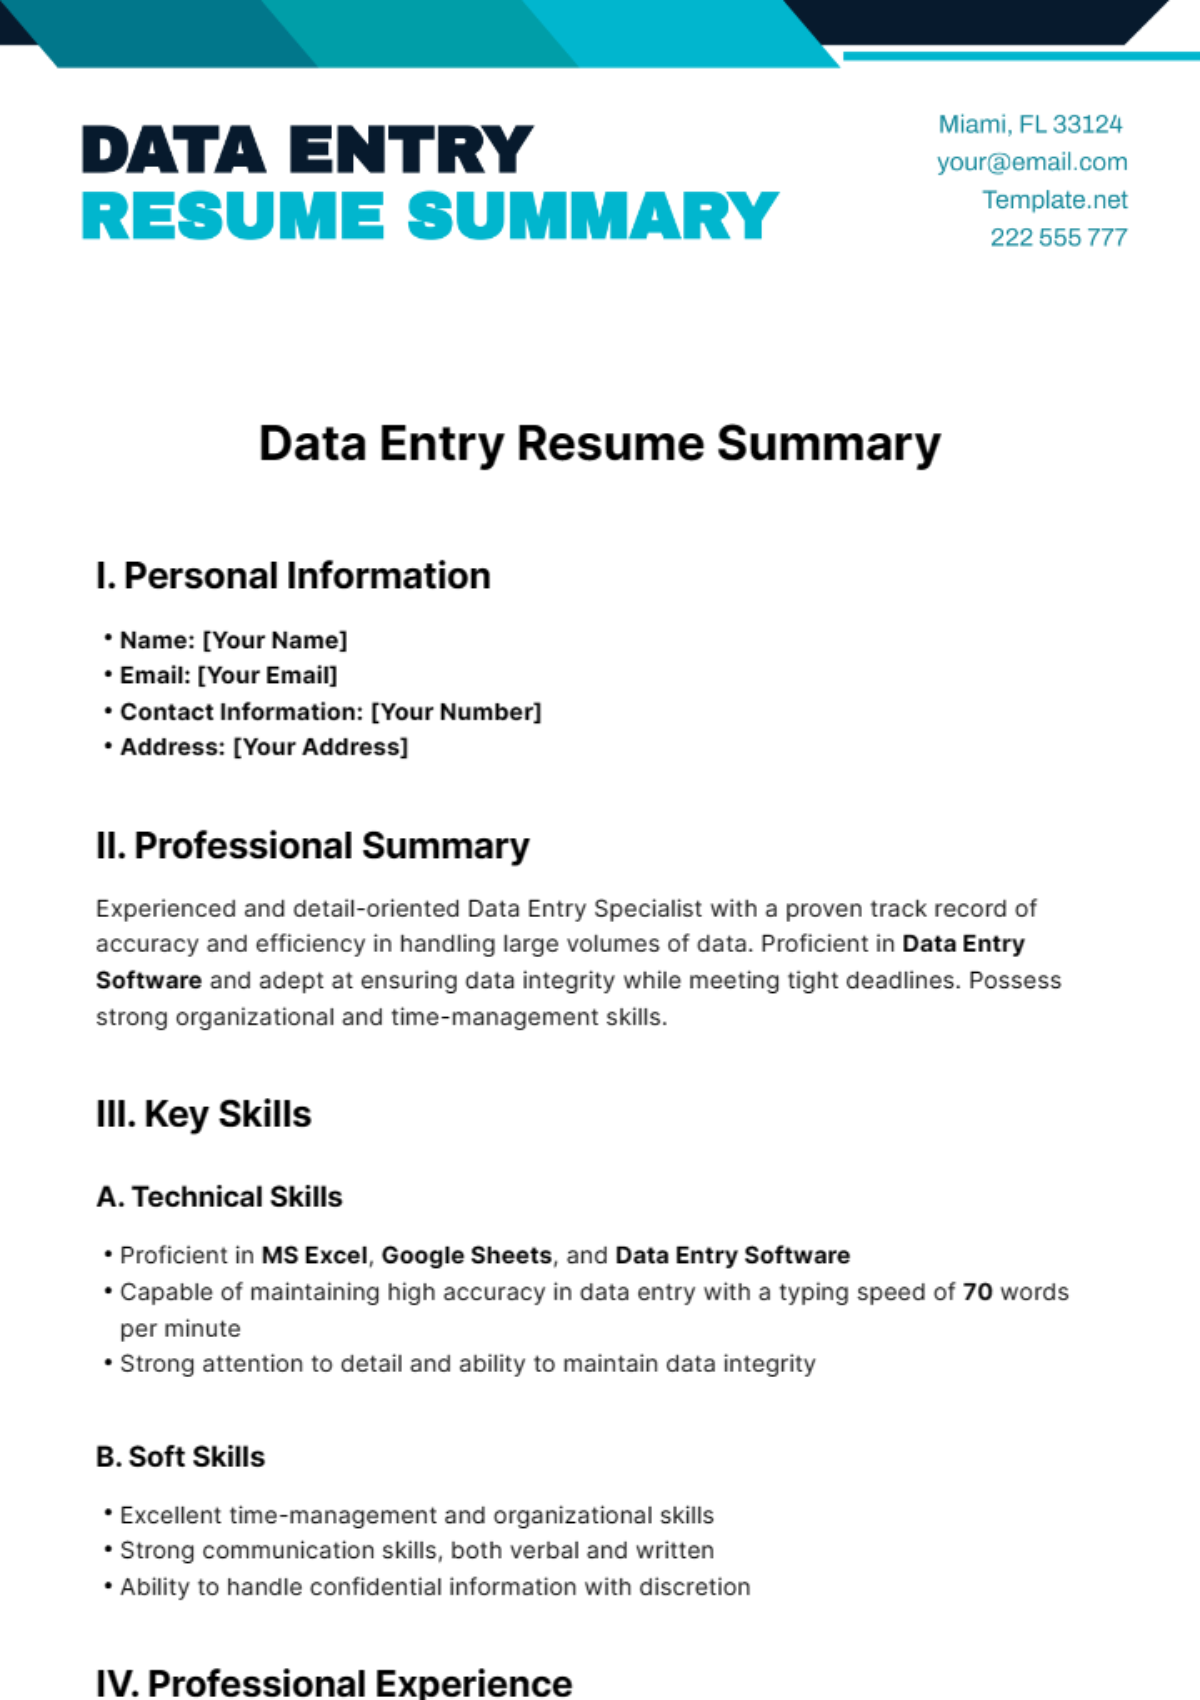 Data Entry Resume Summary Template